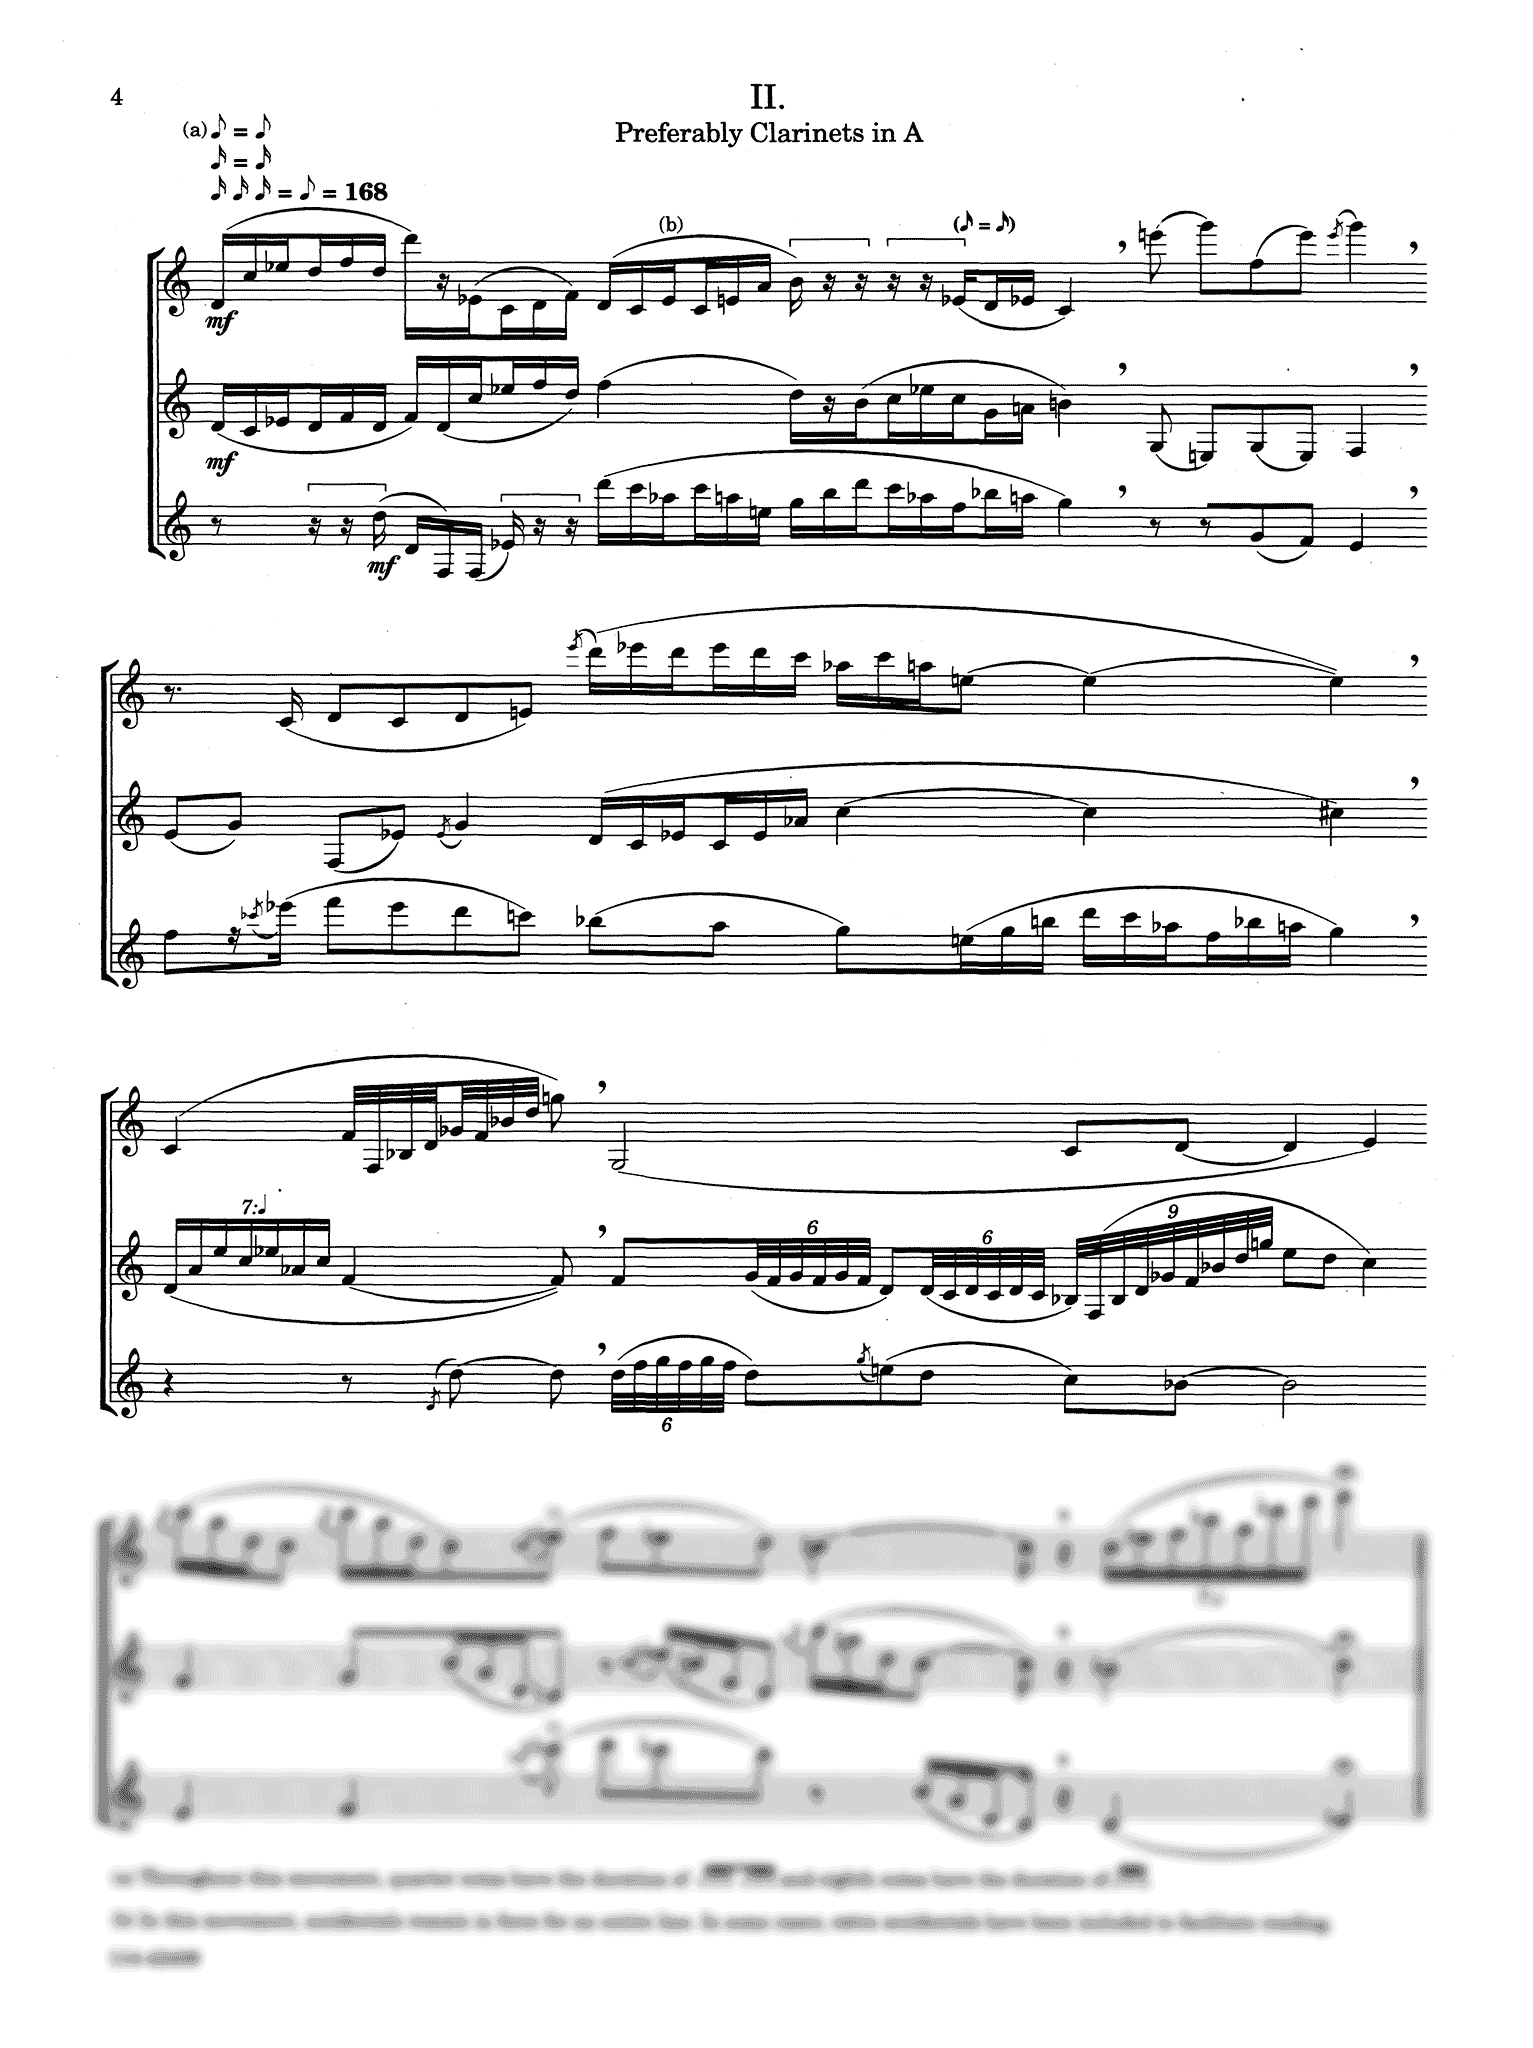 Stravinsky Three Pieces arranged for 3 Clarinets Barrett - Movement 2